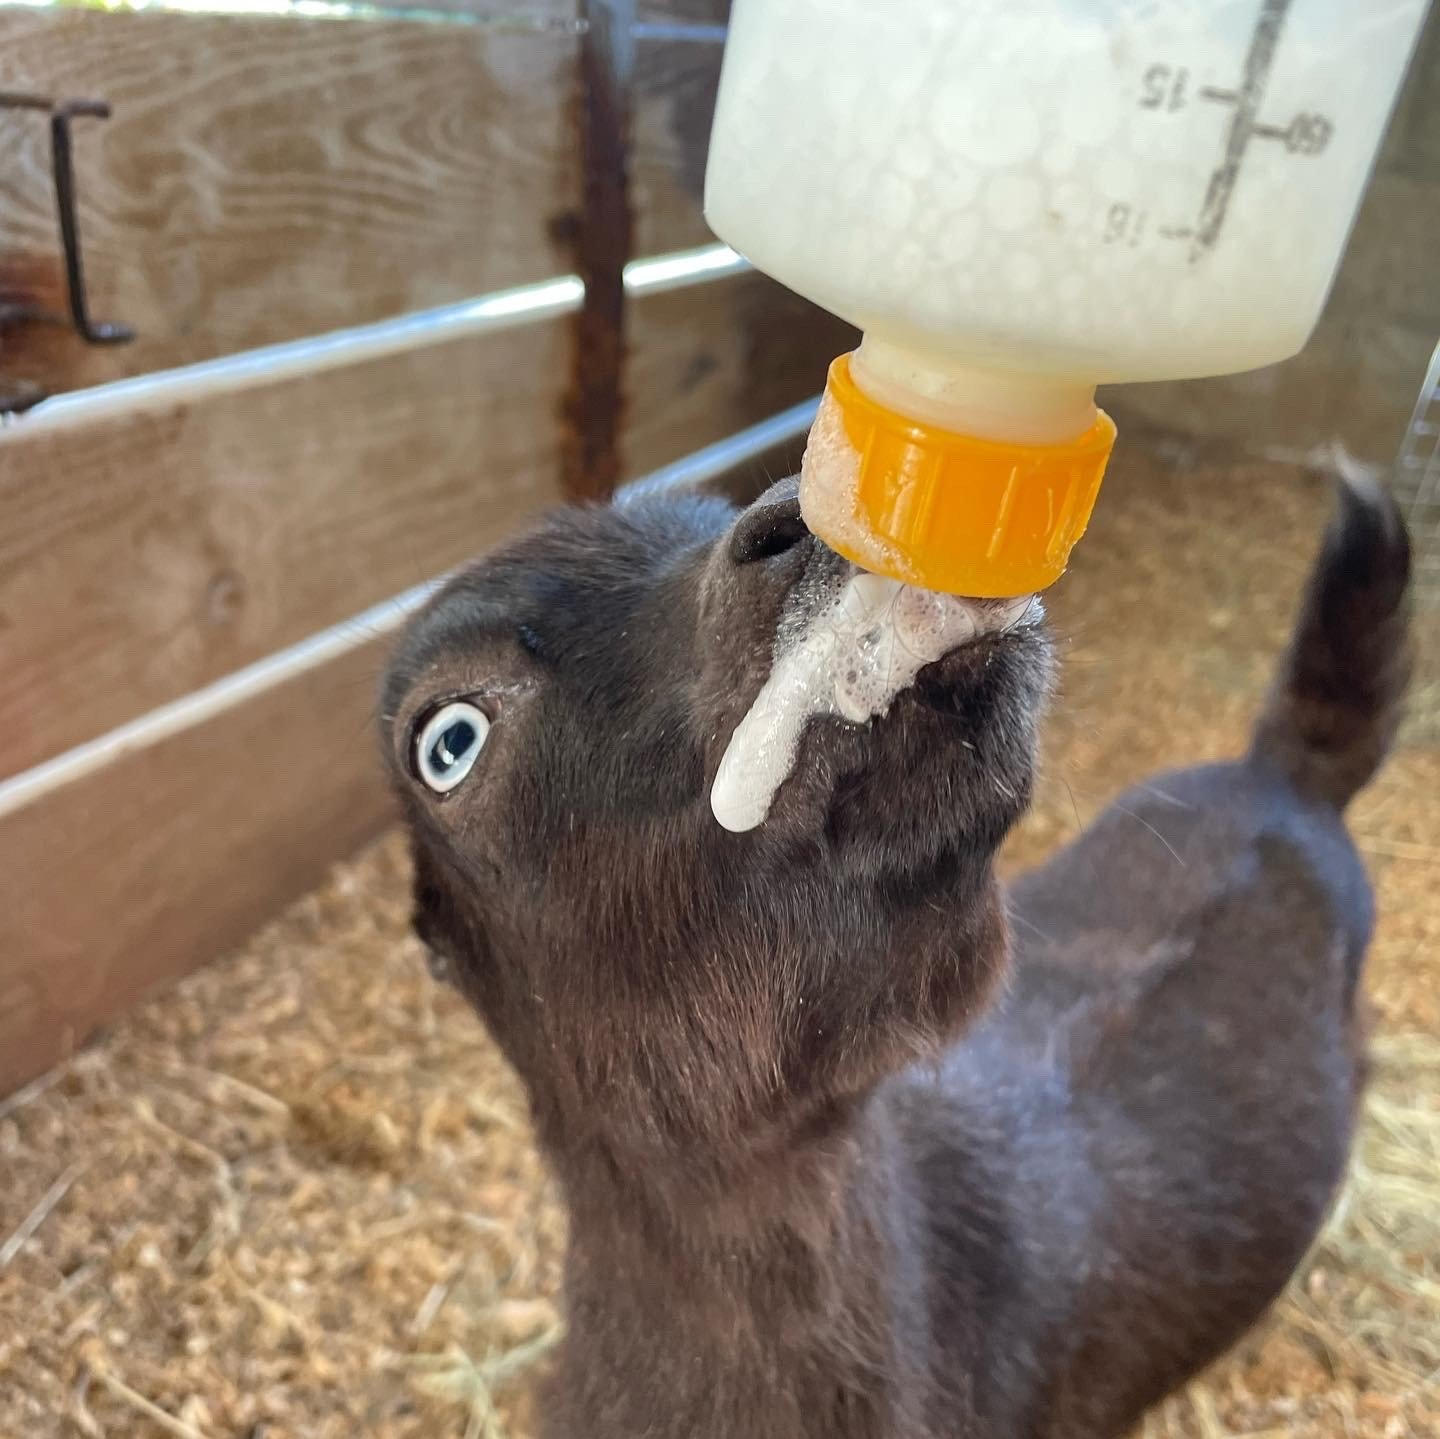 Baby Goats, Miniature Breed, Goat Yoga - Loxahatchee, Florida - 24 Karat Ranch